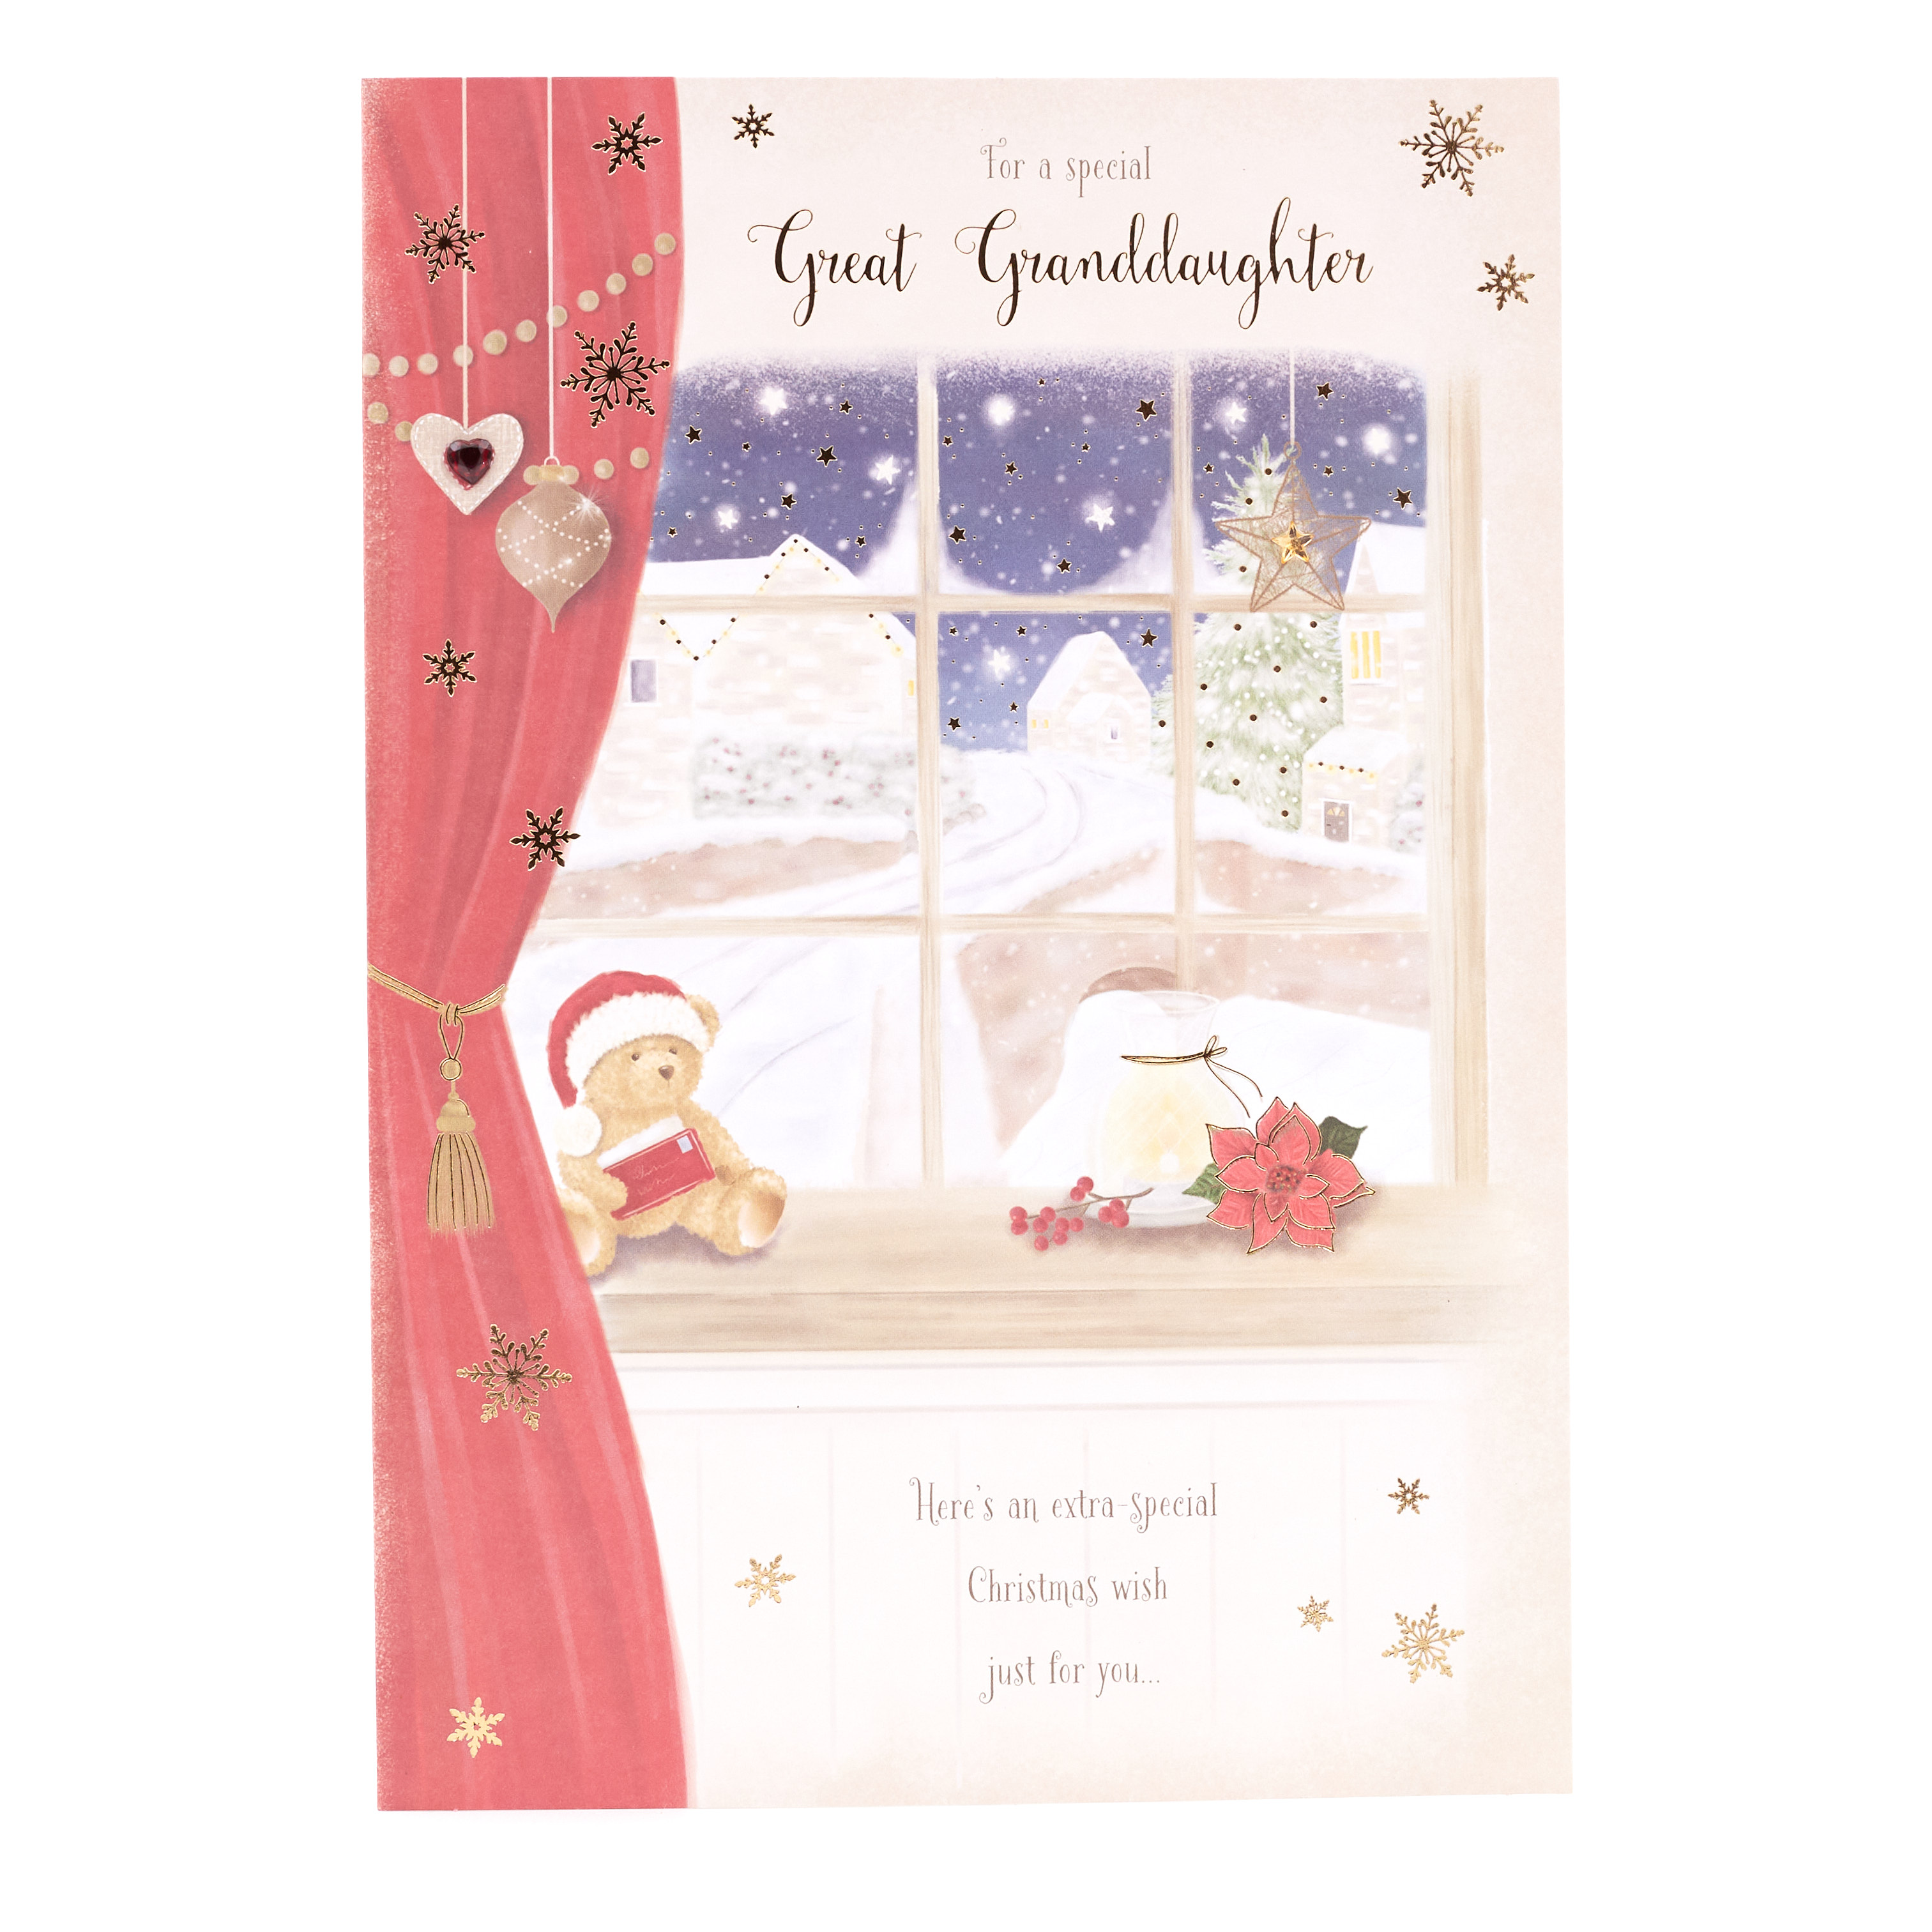 Christmas Card - Great Granddaughter, Christmas Window